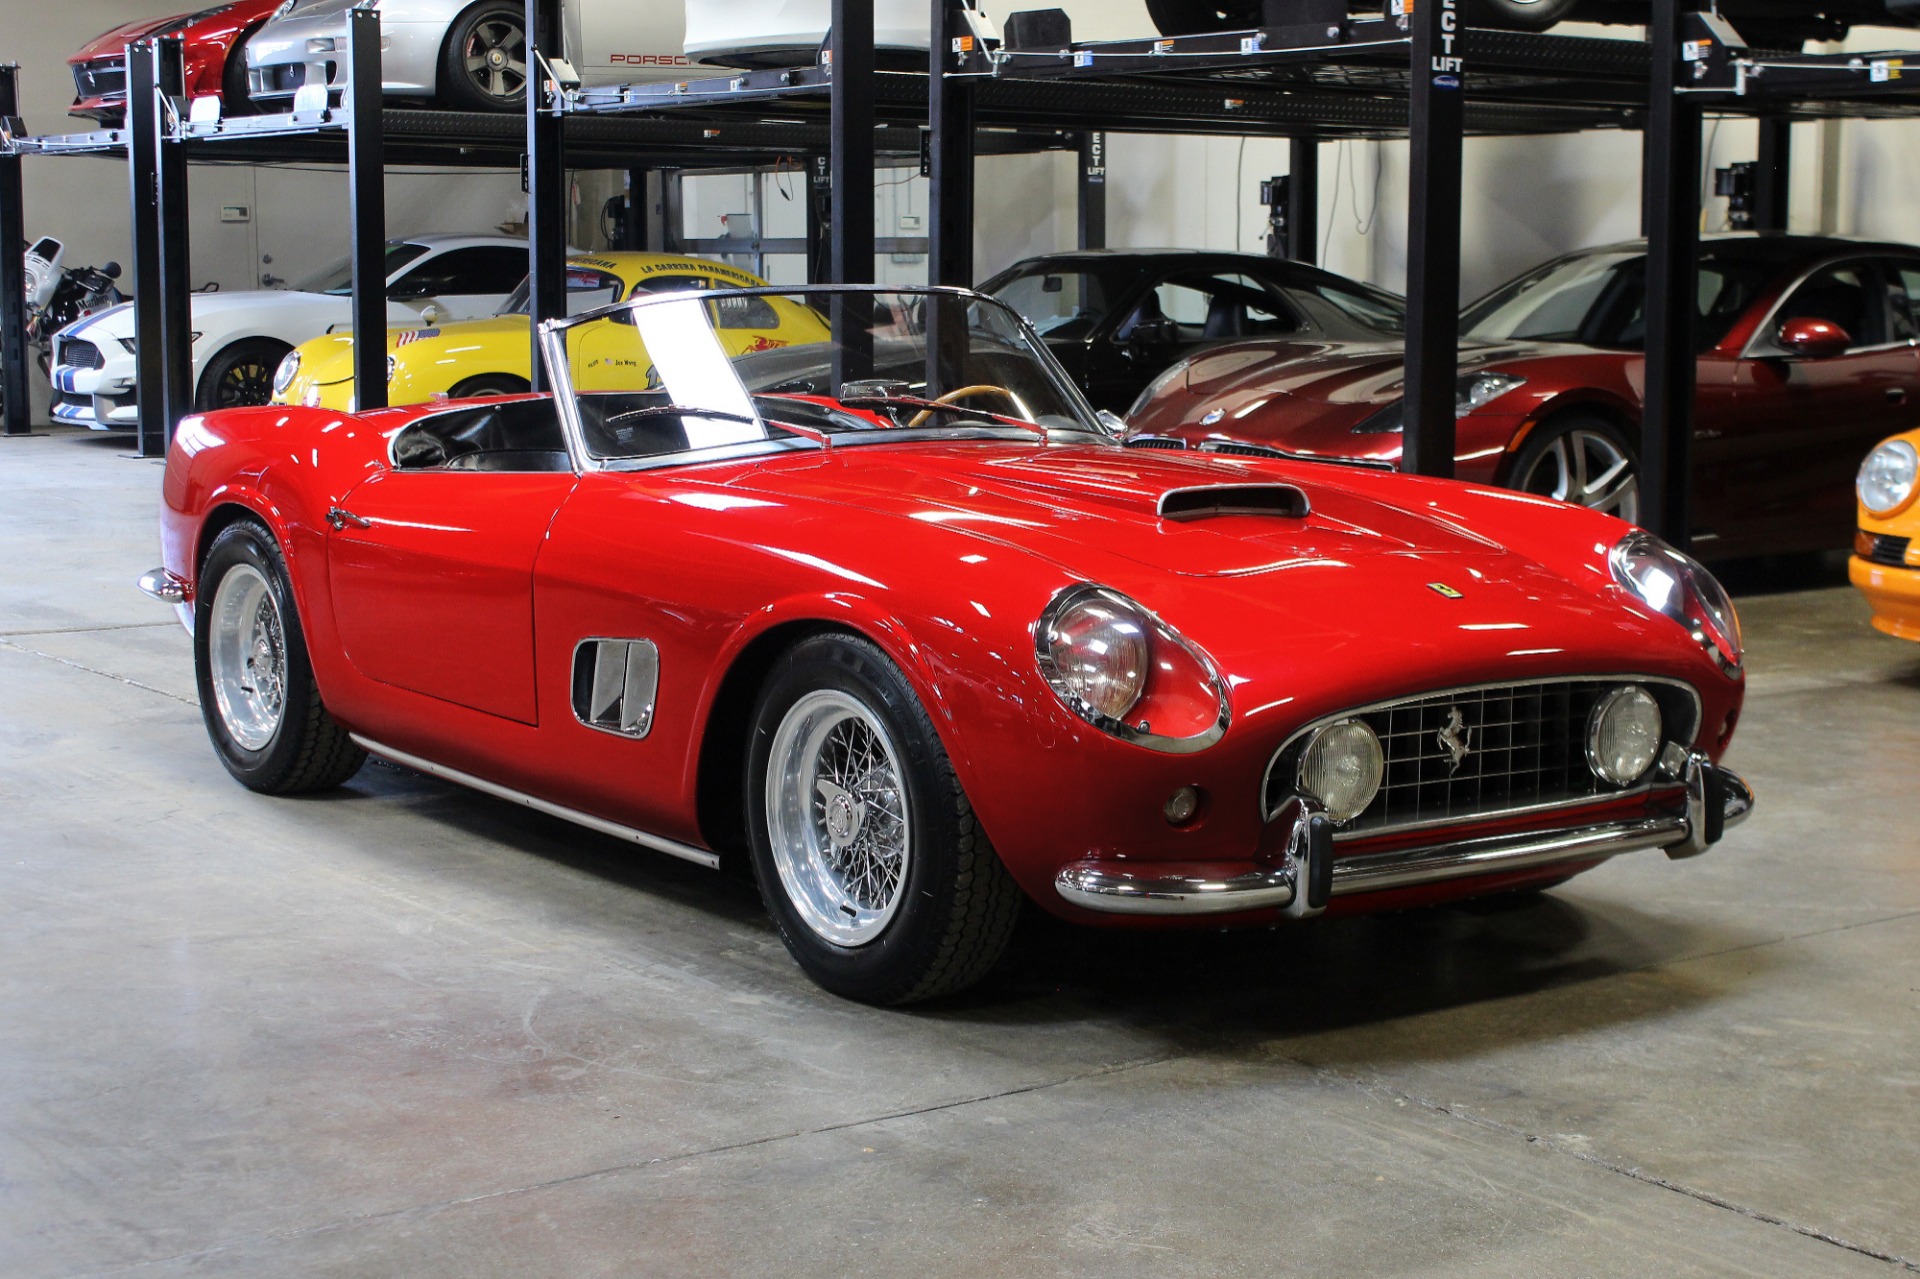 Used 1962 Ferrari 250 GT California Spider for sale $999,995 at San Francisco Sports Cars in San Carlos CA 94070 1